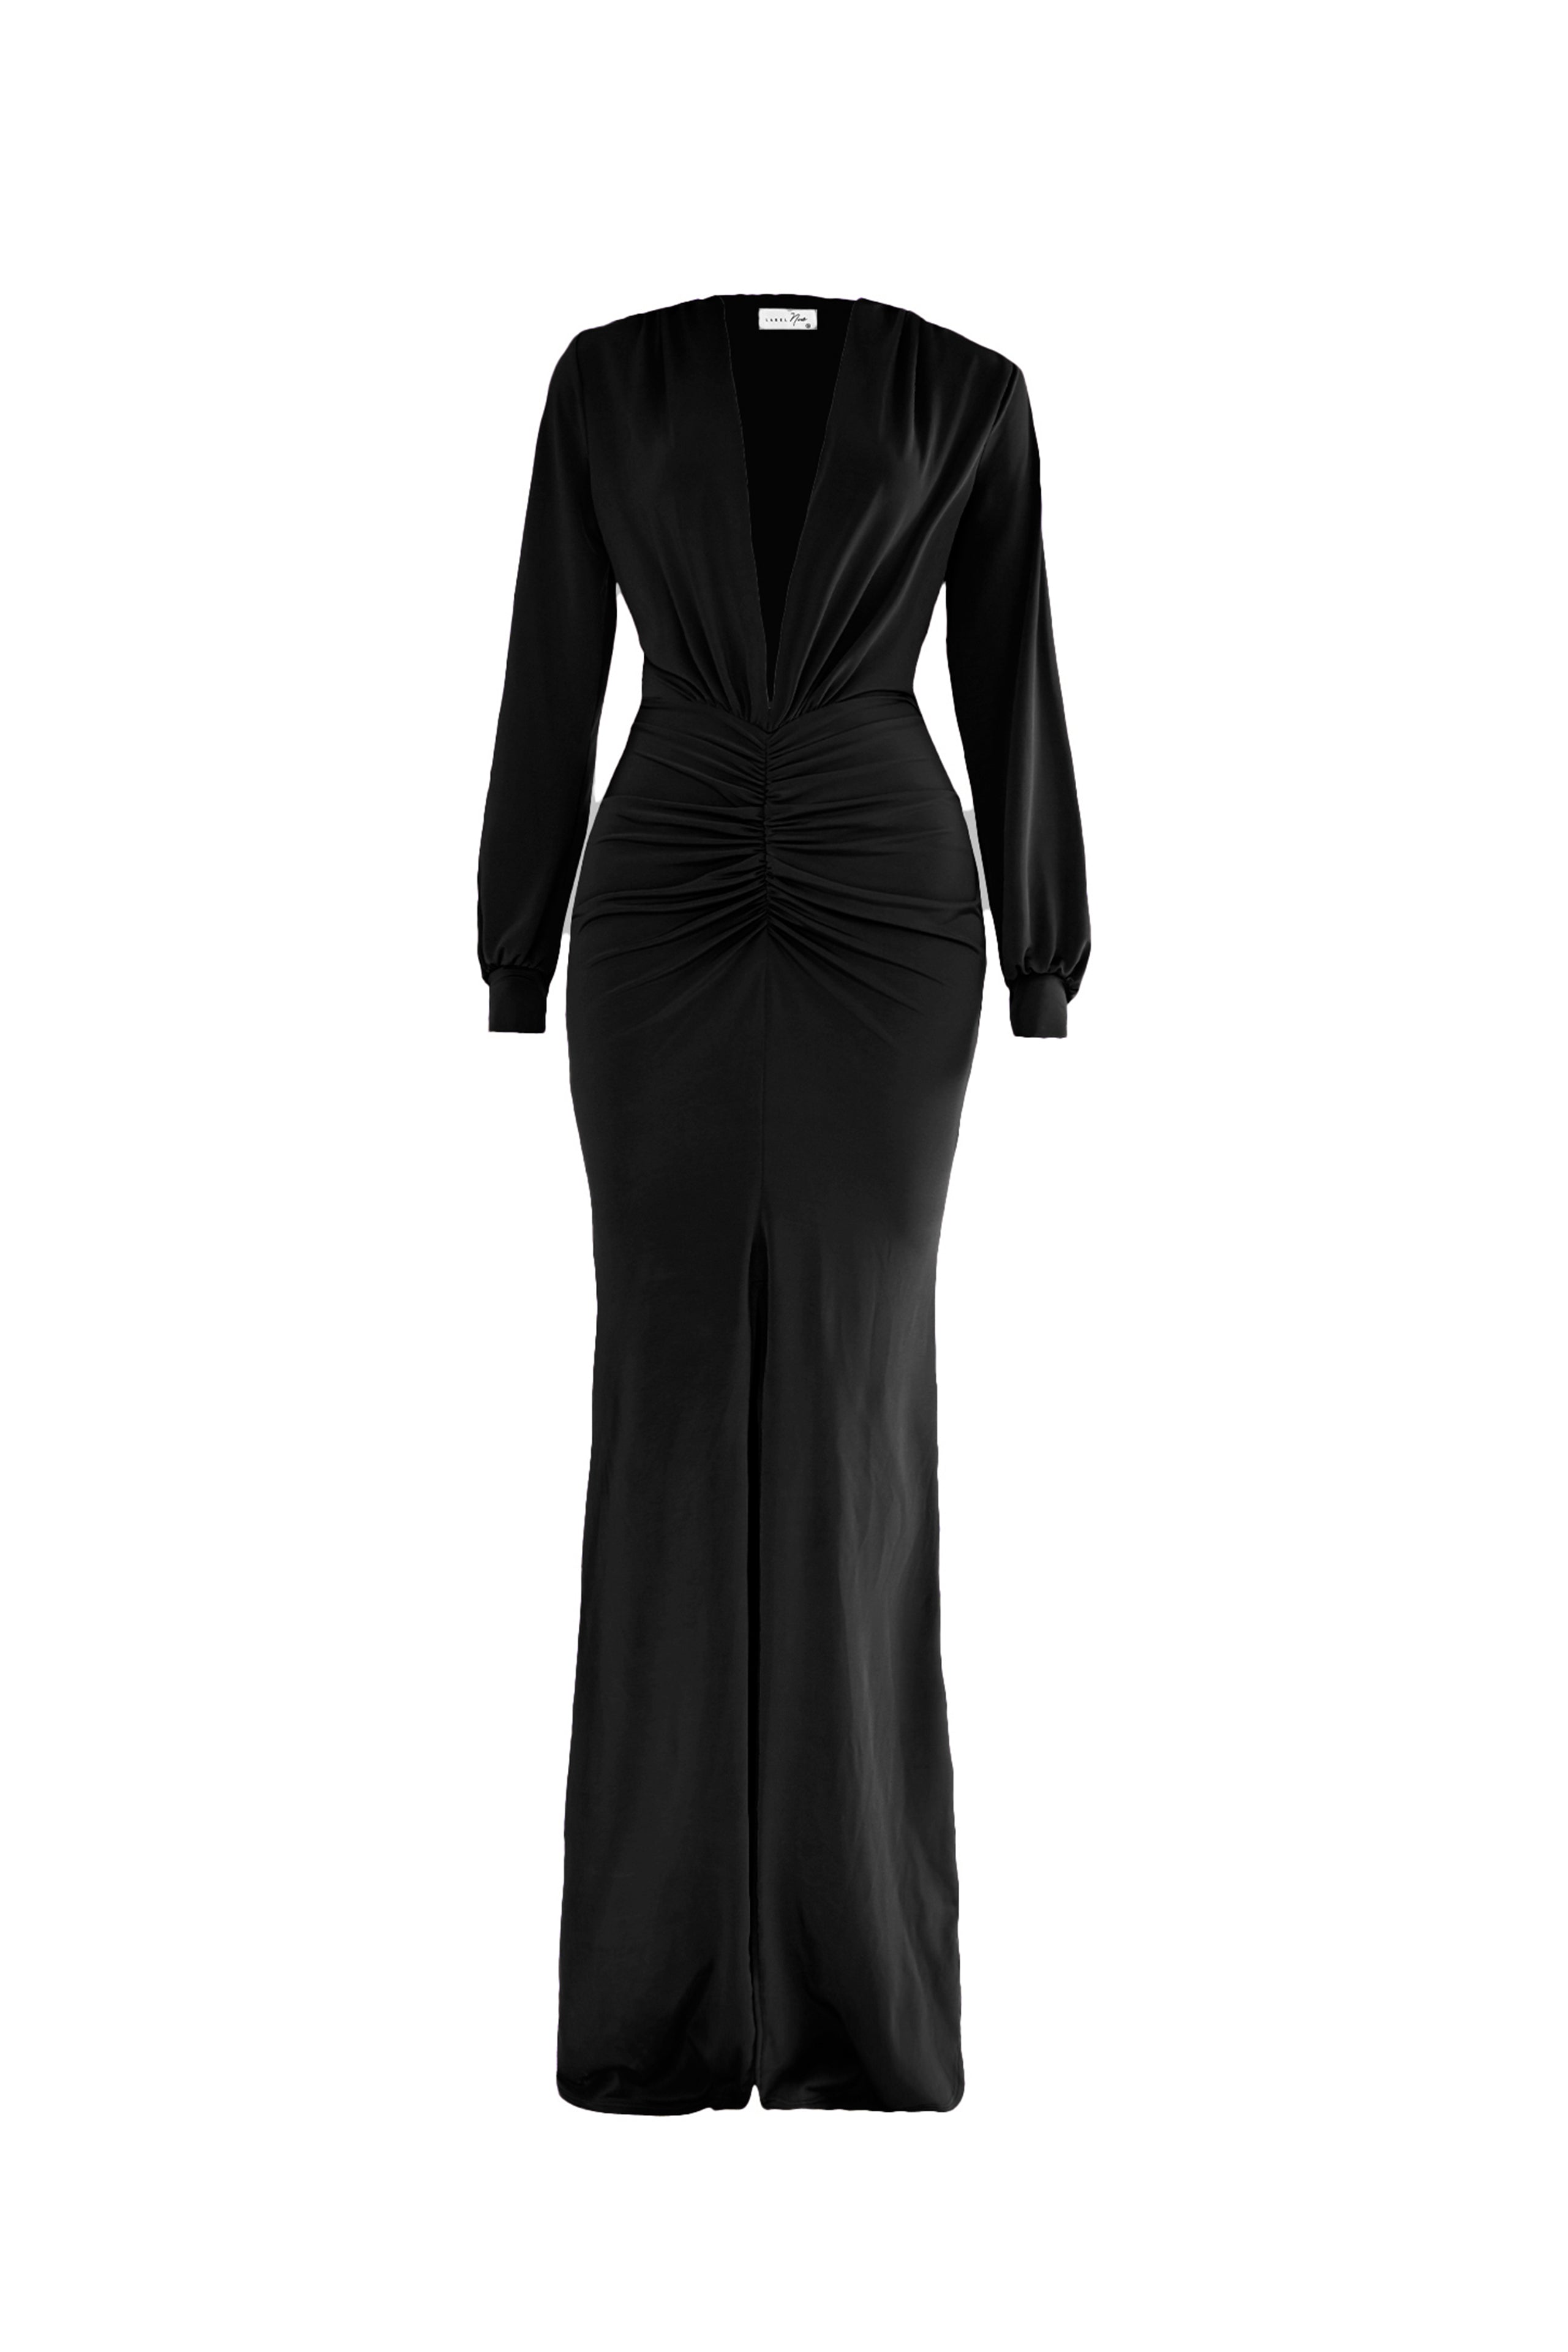 Frida Black Dress